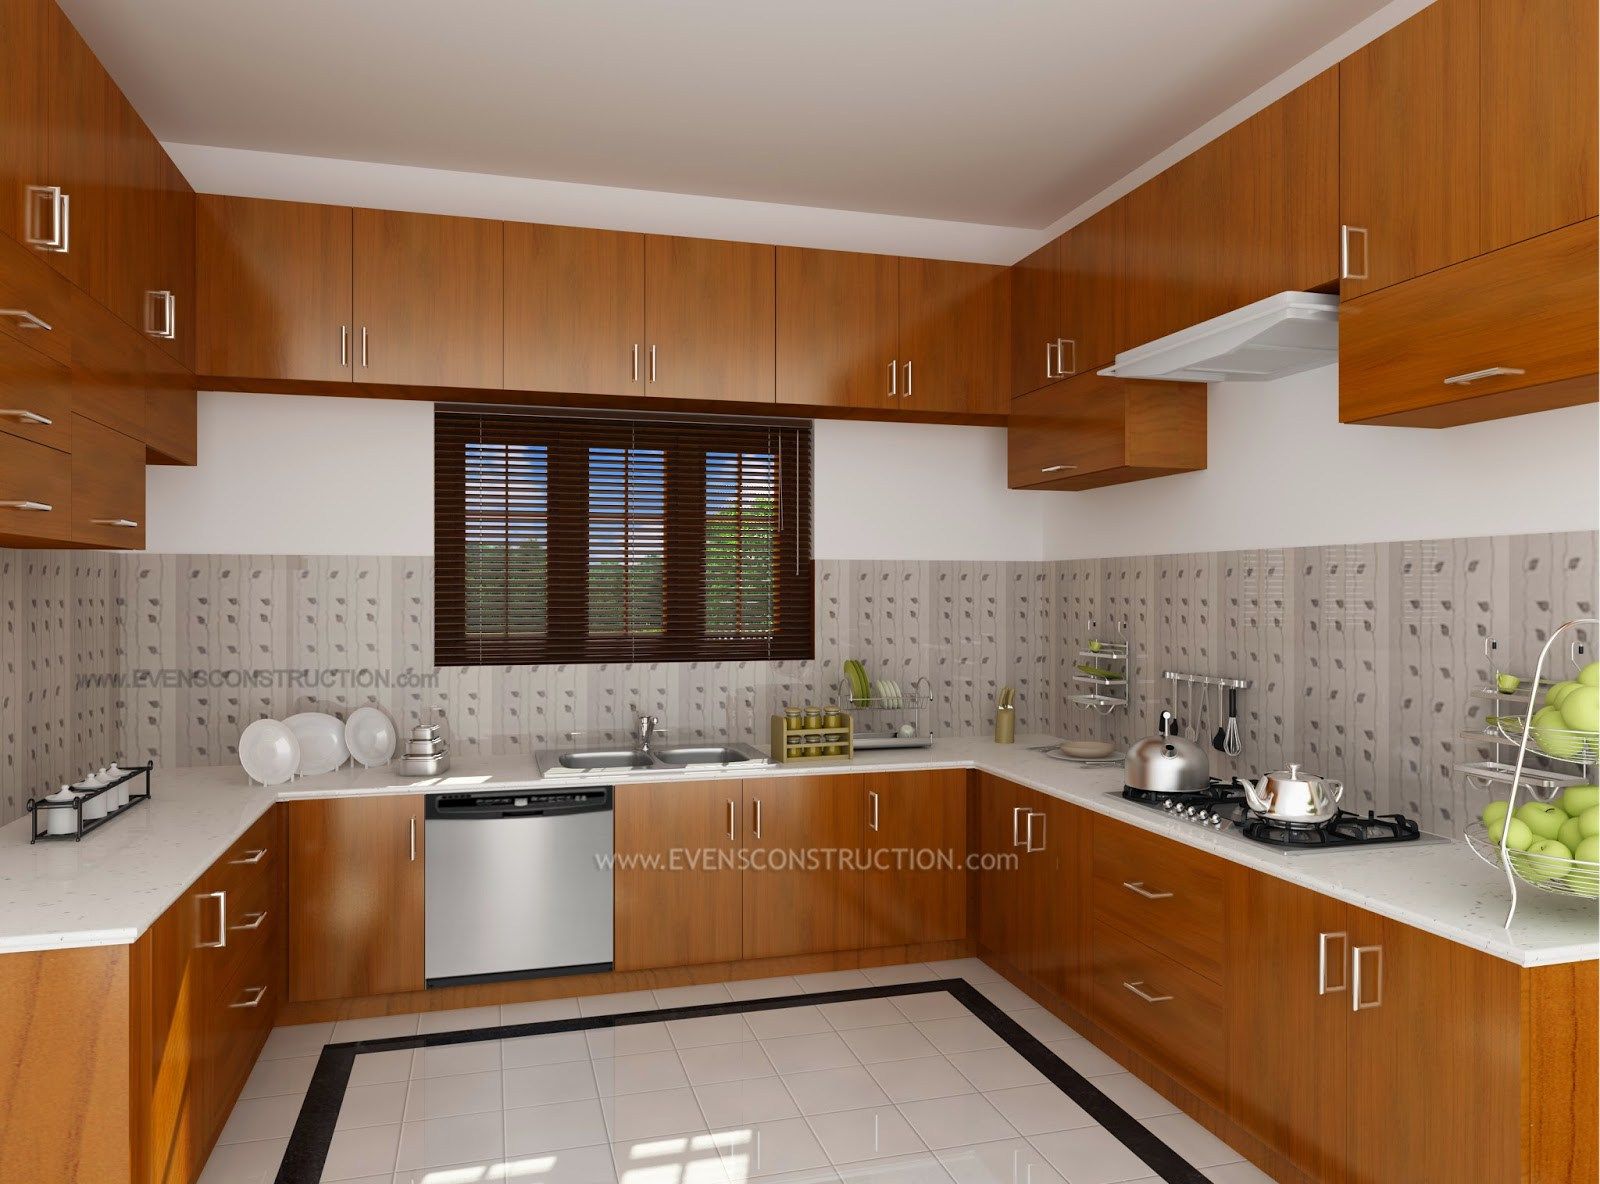 House Designs Kitchen Decoration Design Interior Home Kerala Modern